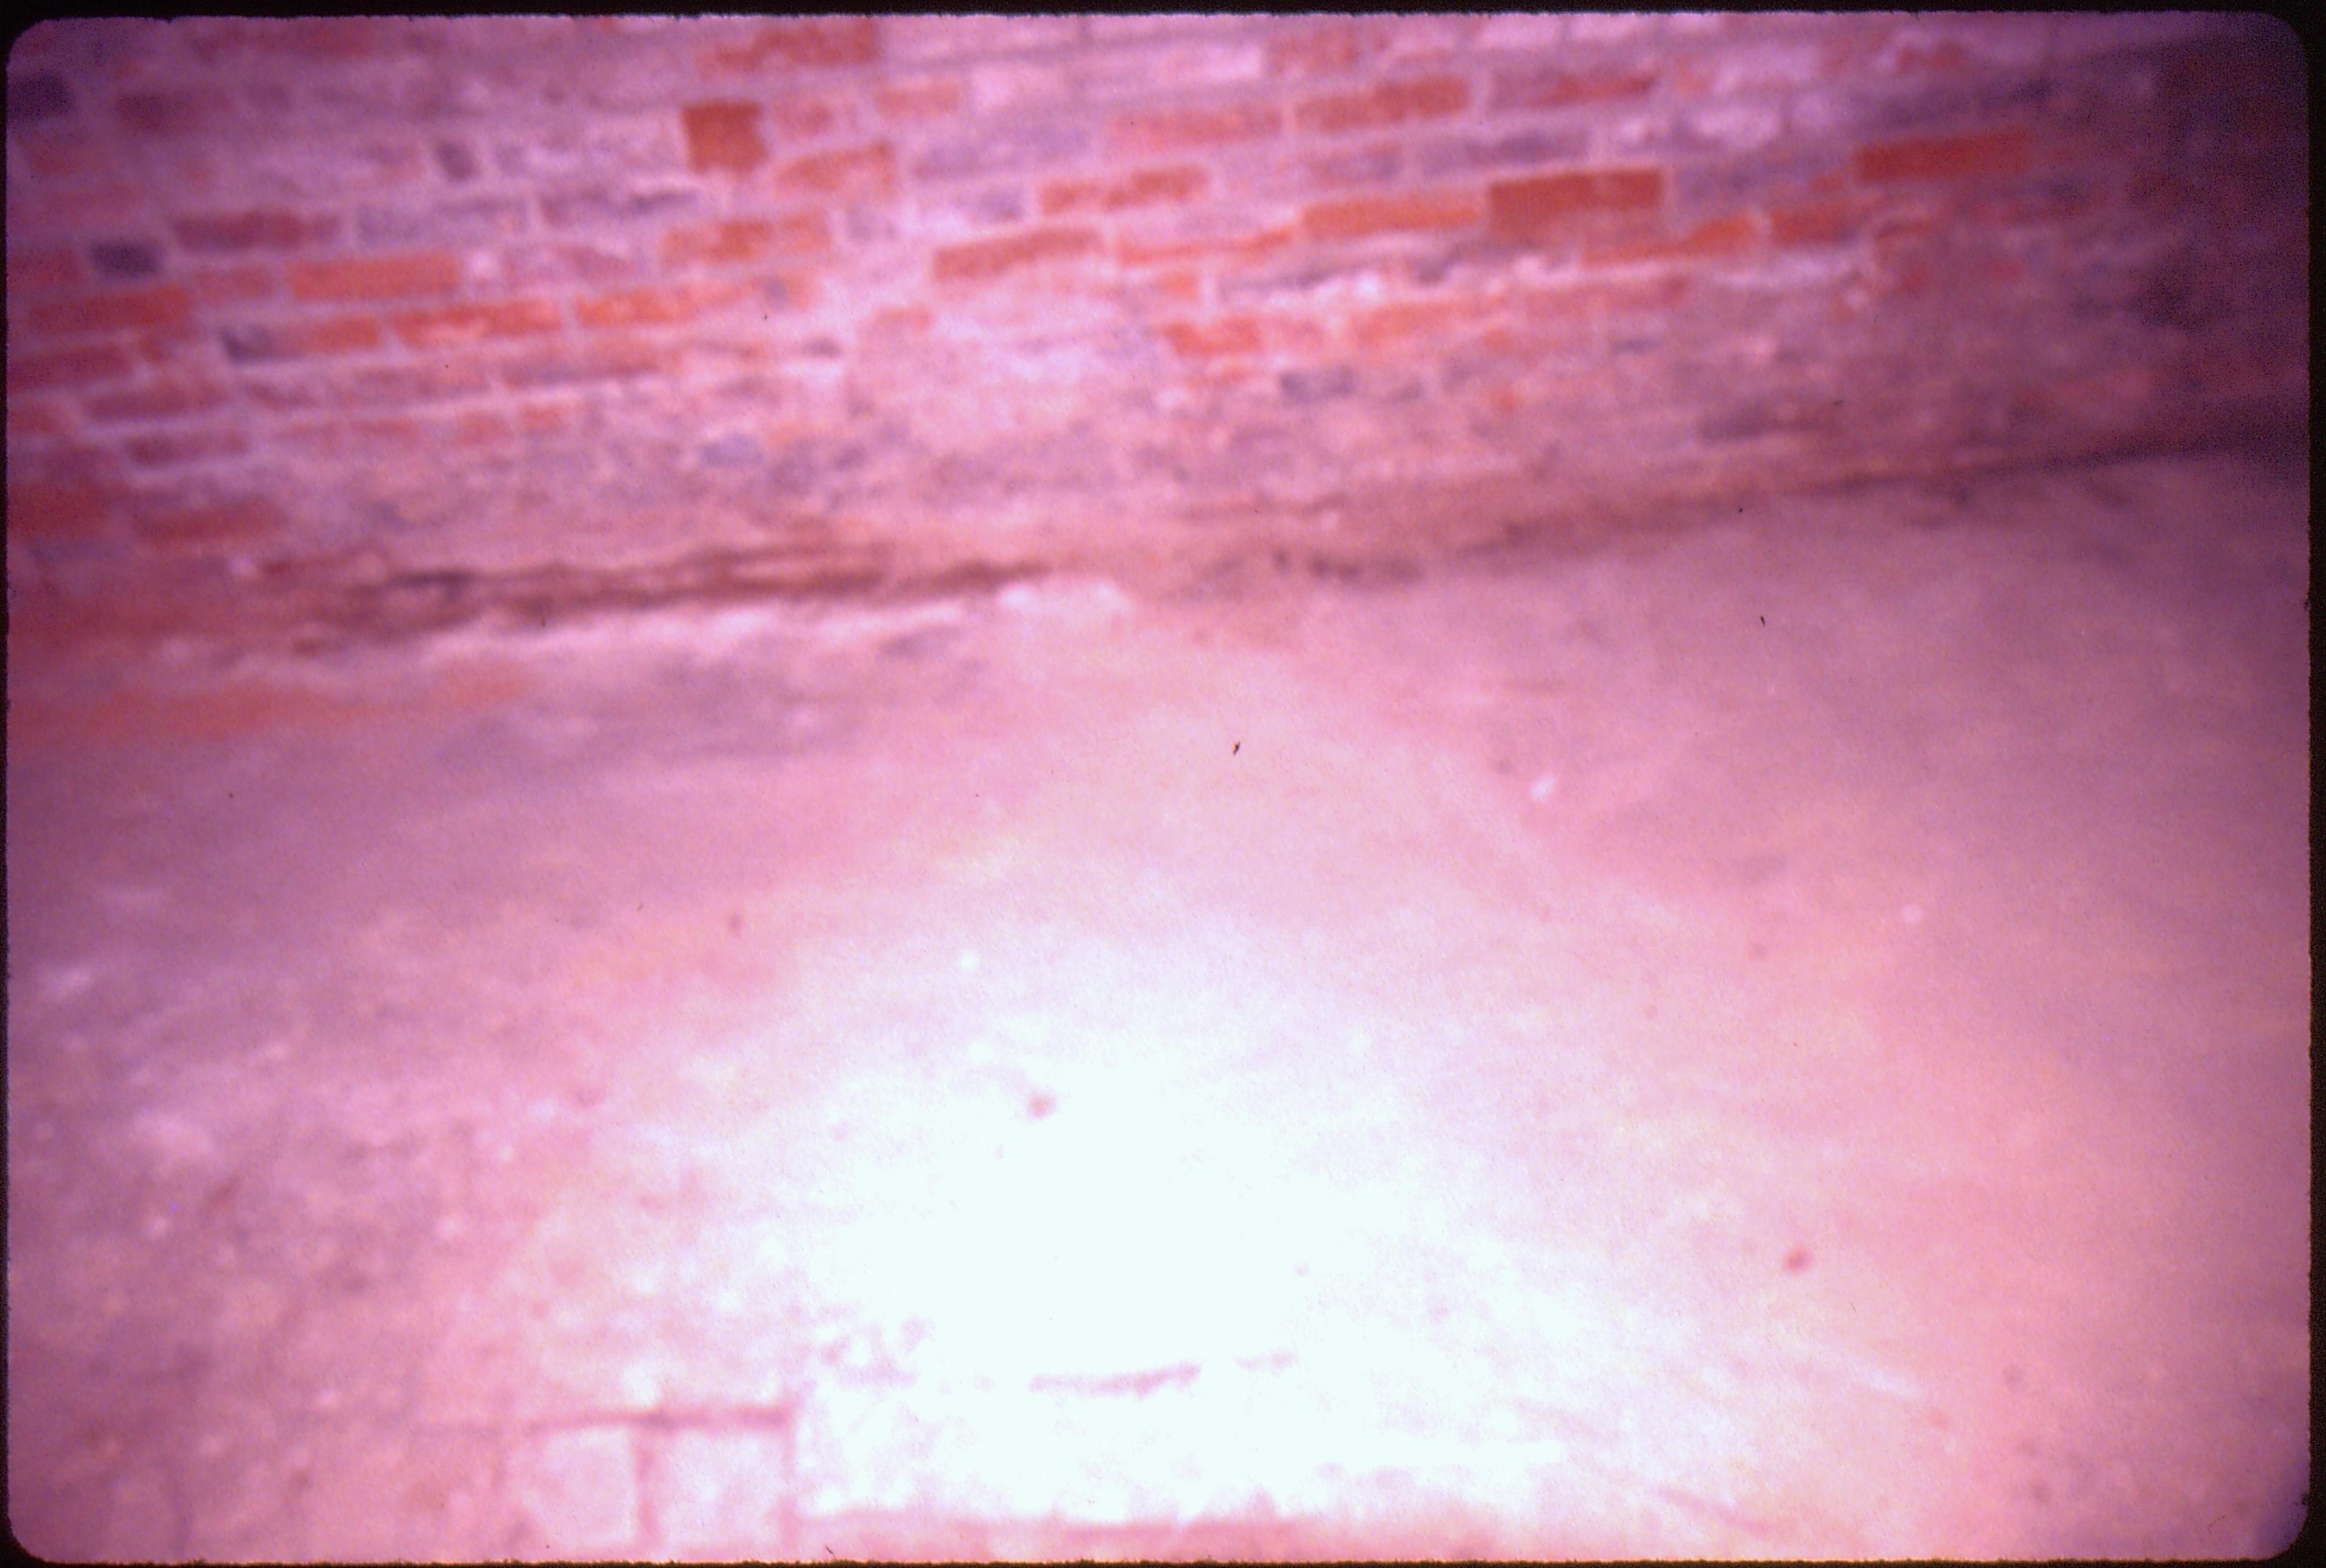 Lyon House - basement, floor brick pattern (overexposed), brick wall Looking East in basement Lyon, Basement, brick wall, brick floor